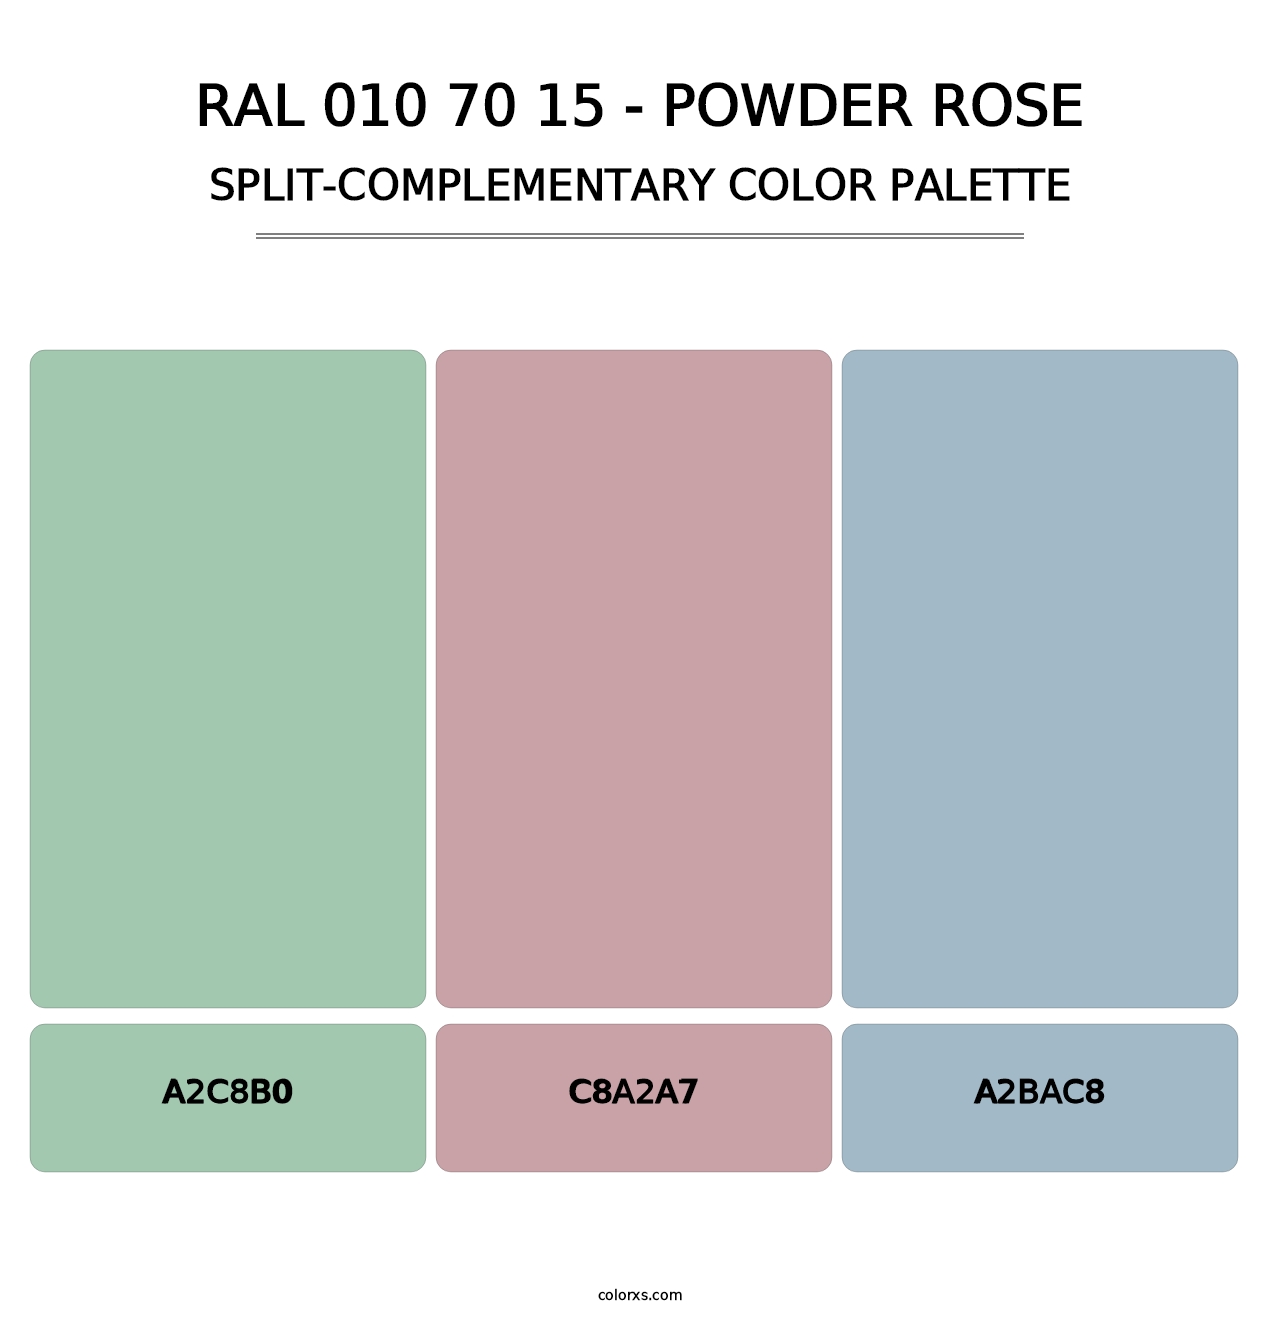 RAL 010 70 15 - Powder Rose - Split-Complementary Color Palette